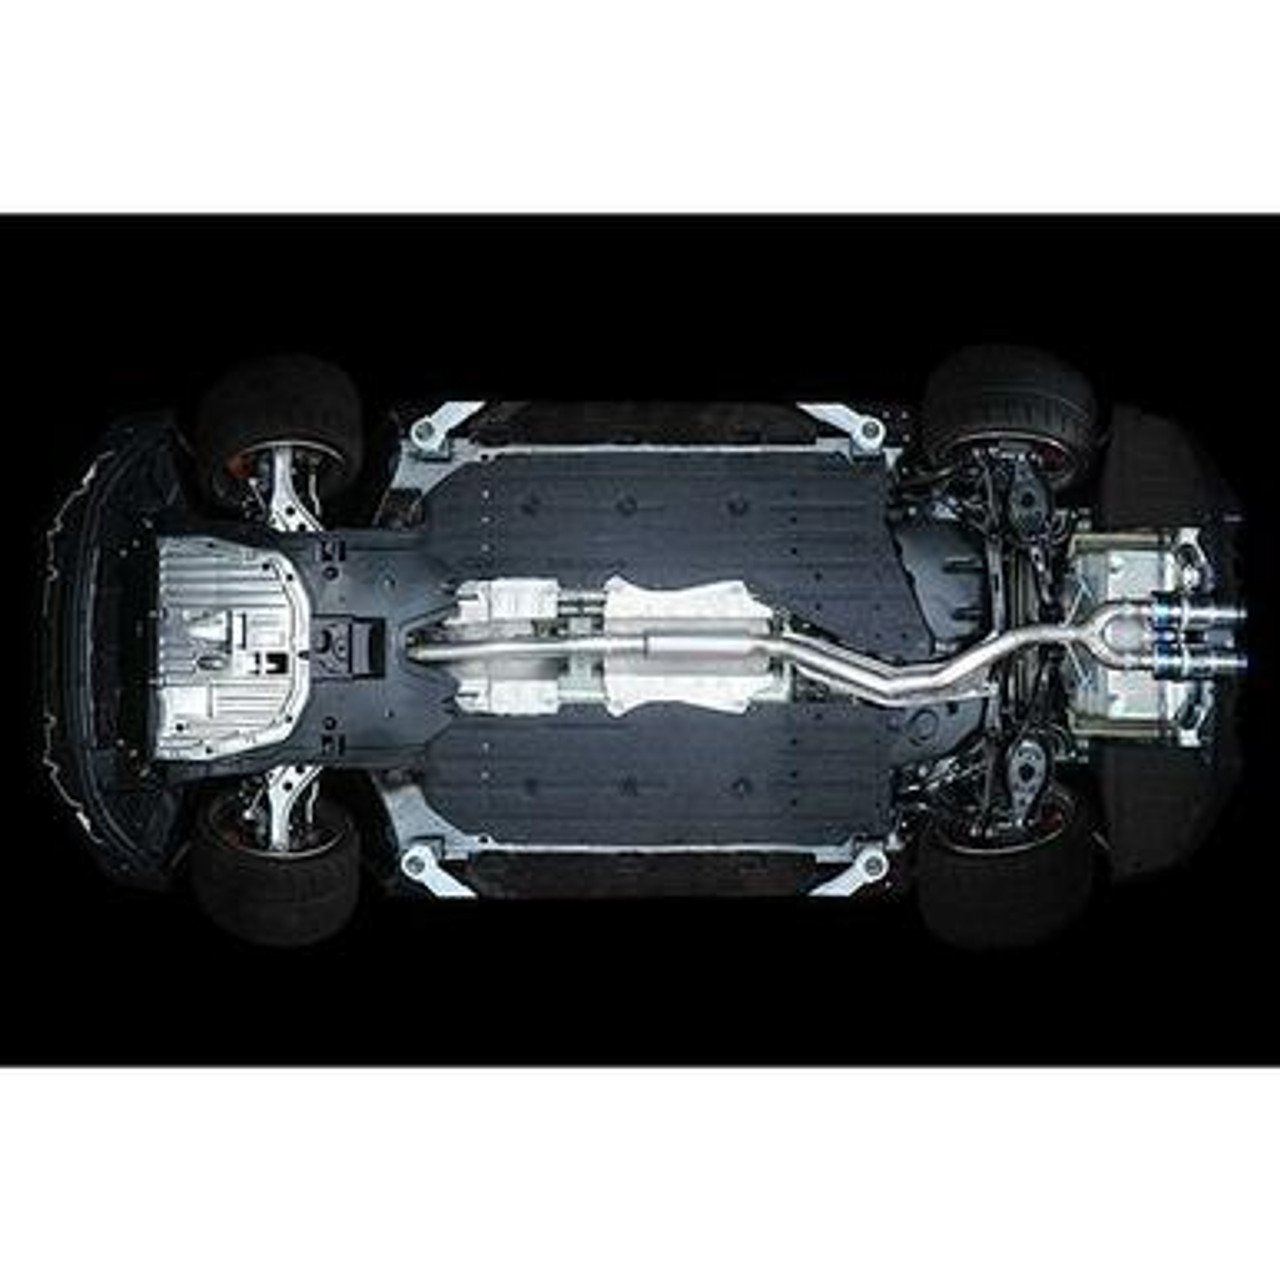 Tomei Expreme Ti Full Titanium Exhaust "Type-D" | 2017-2020 Honda Civic Type-R